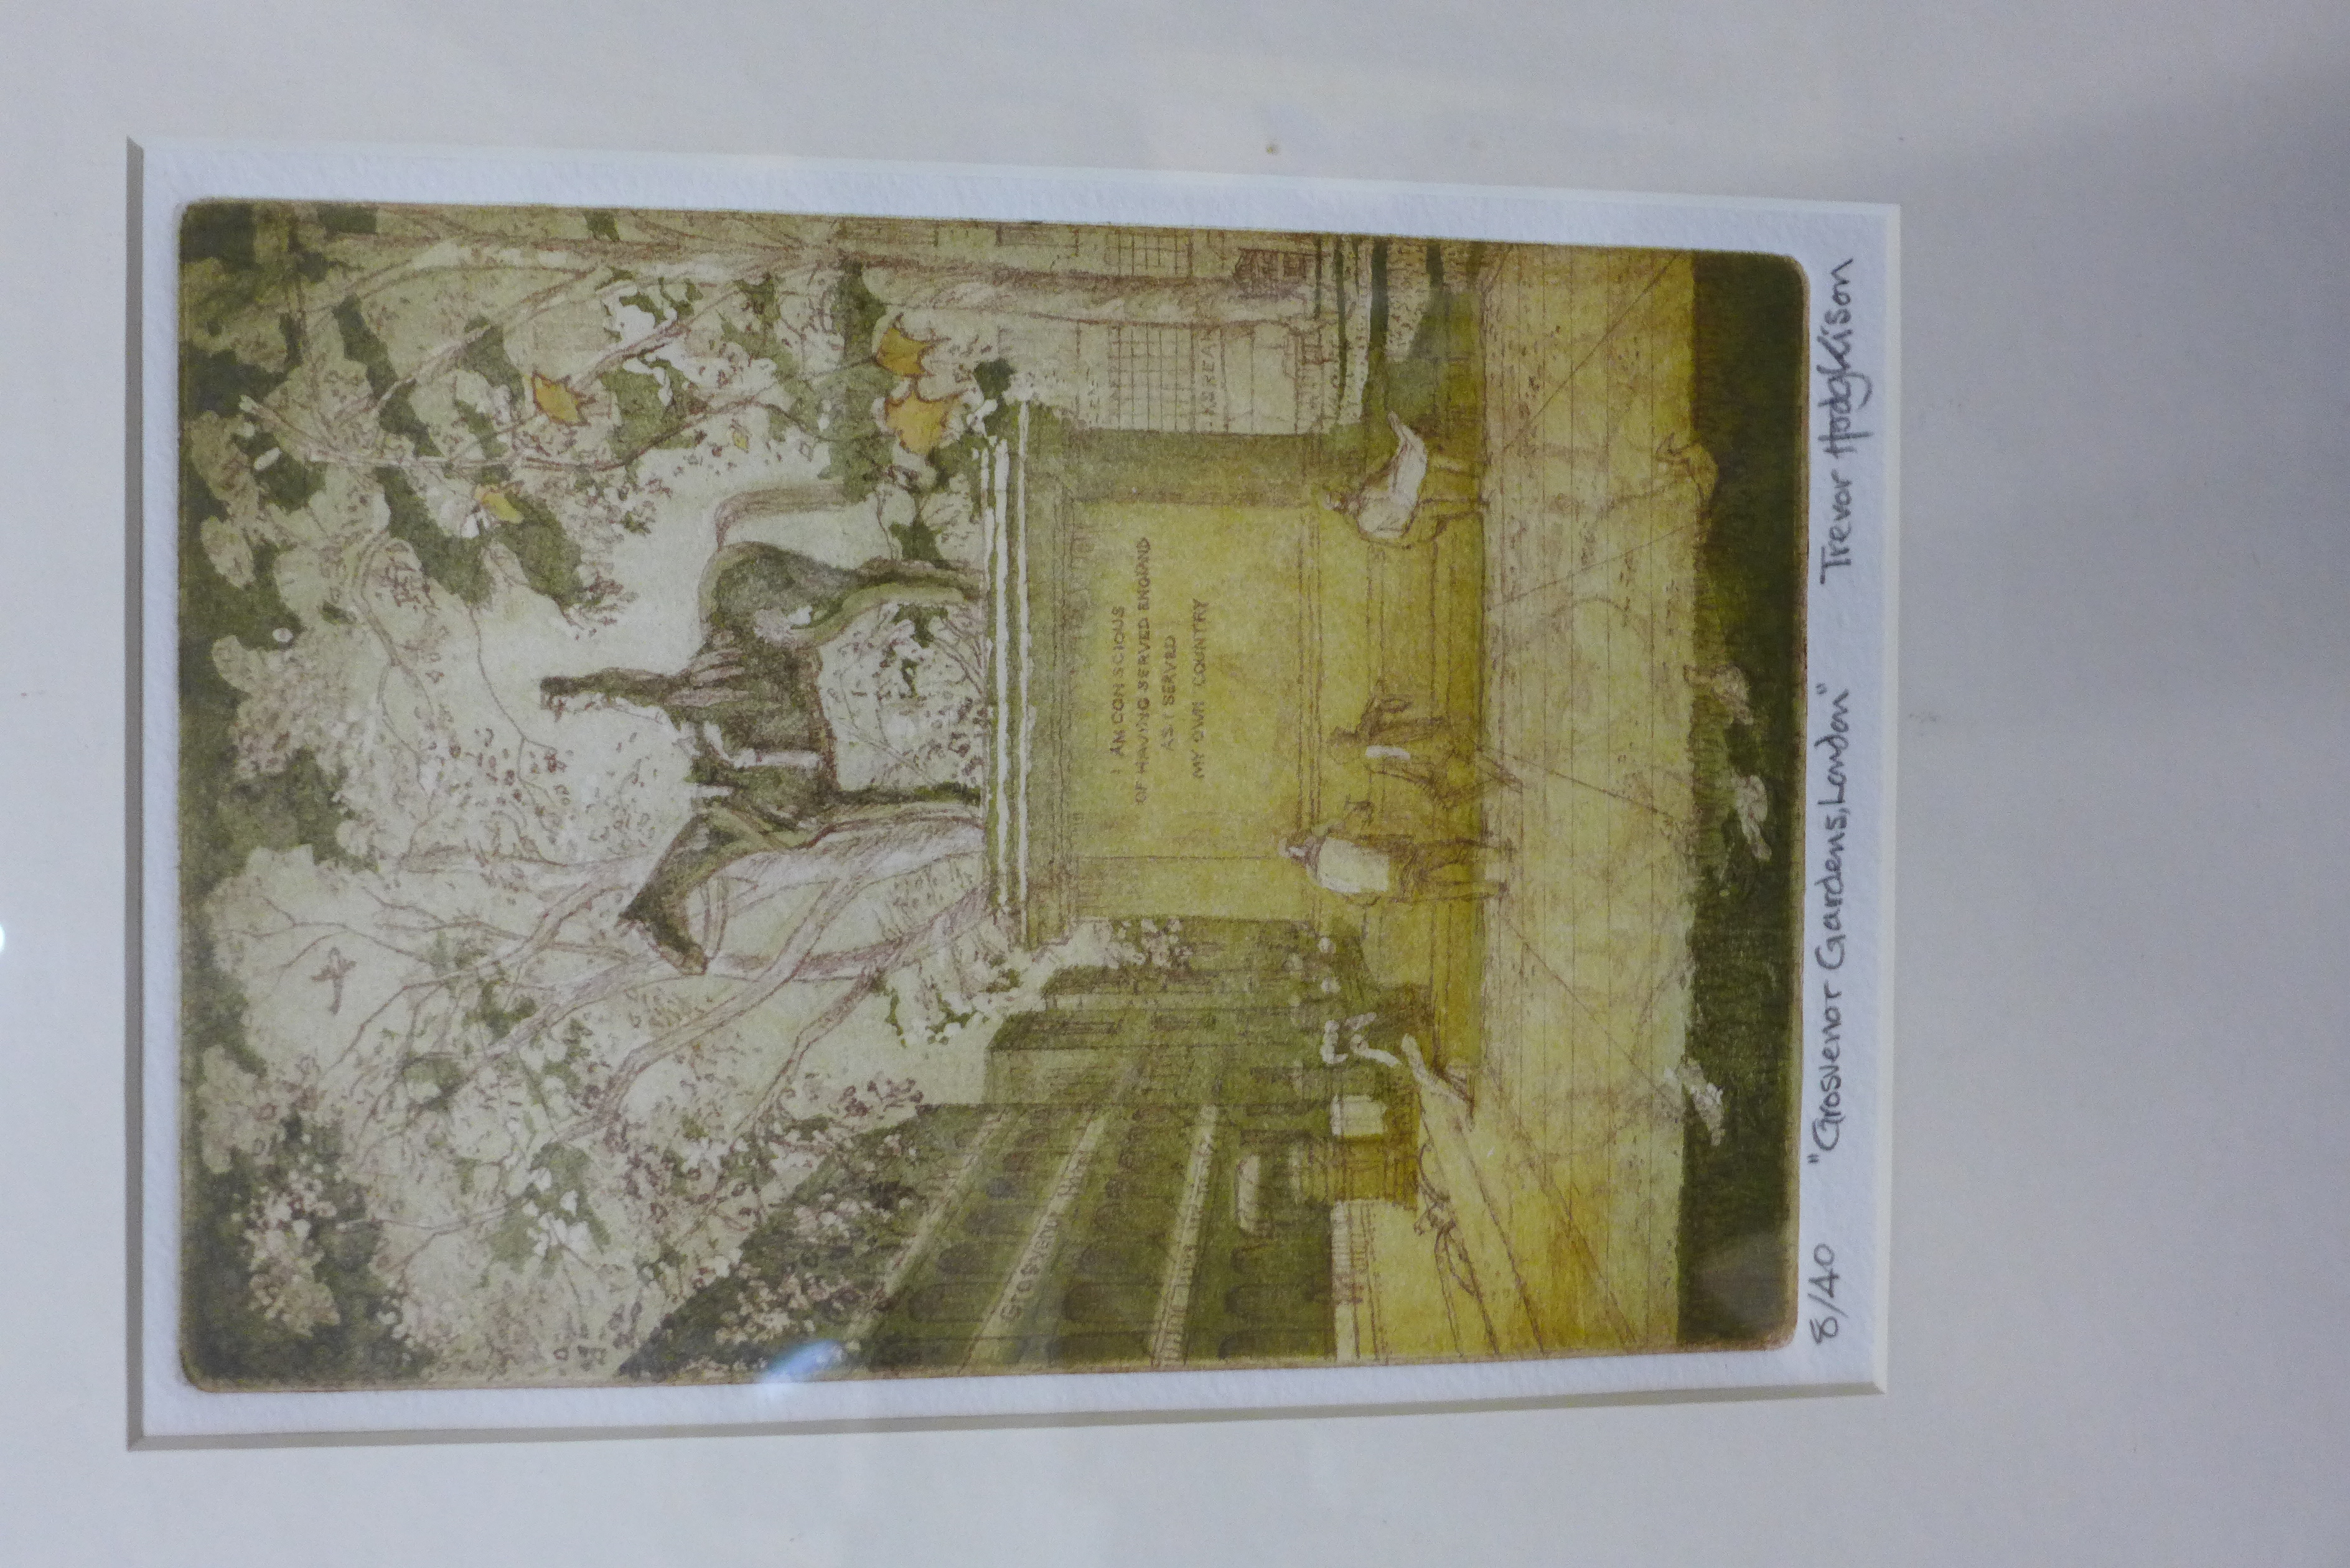 A signed Trevor Hodgkinson limited edition print, Grosvenor Gardens, London, 22 x 16cms, framed - Image 2 of 3